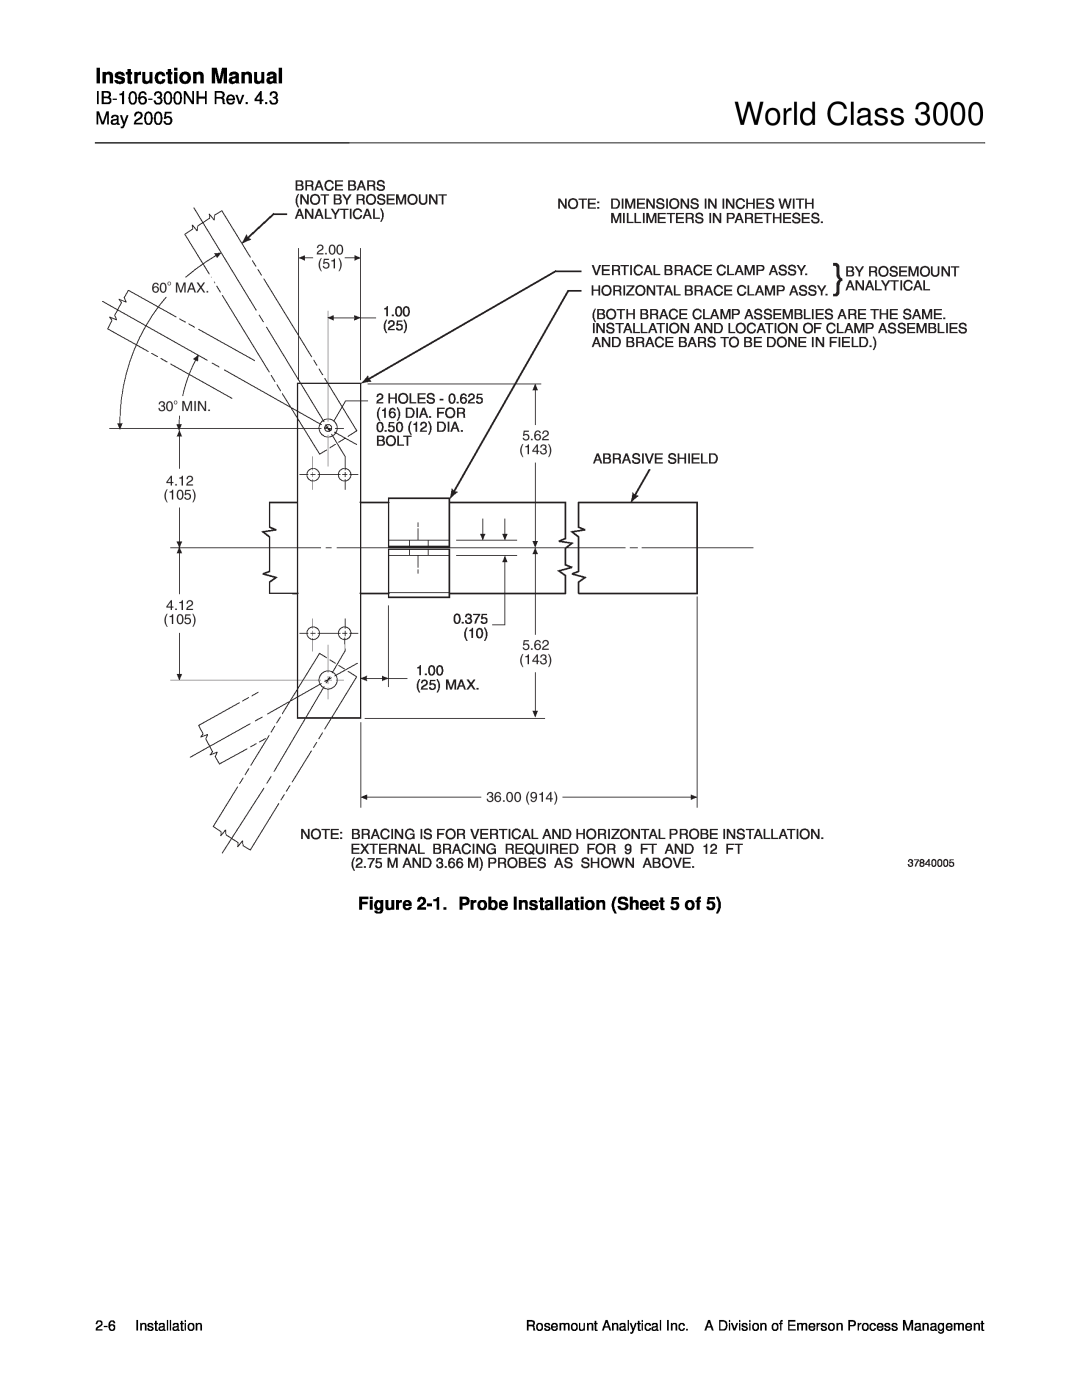 Emerson 3000 instruction manual World Class, Instruction Manual, 1.Probe Installation Sheet 5 of, 2-6Installation 